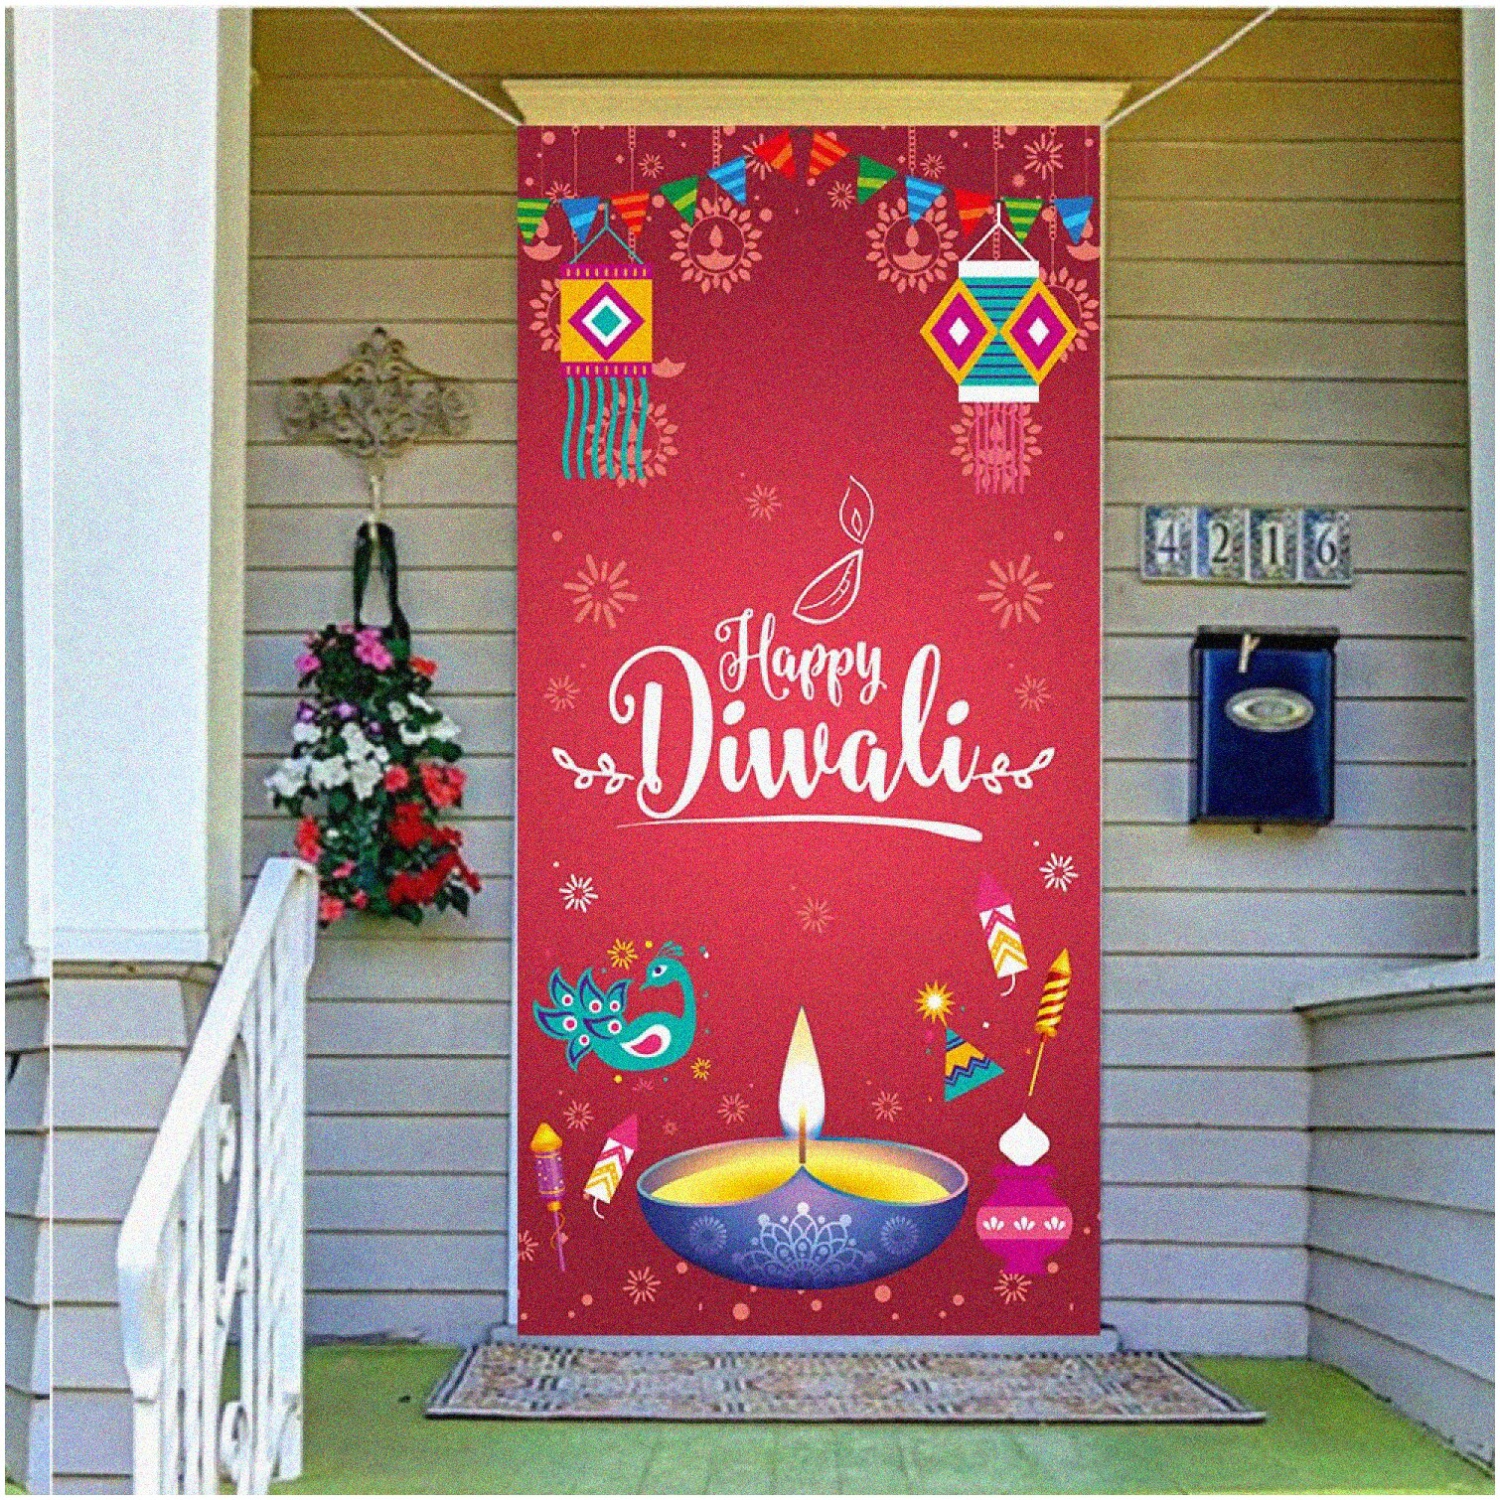 Sparkling Diwali Door Cover: Festive Sign & Lights Decorations - 70.8"x35.4" Banner for Deepawali Party, Celebrate India's Festival of Lights!